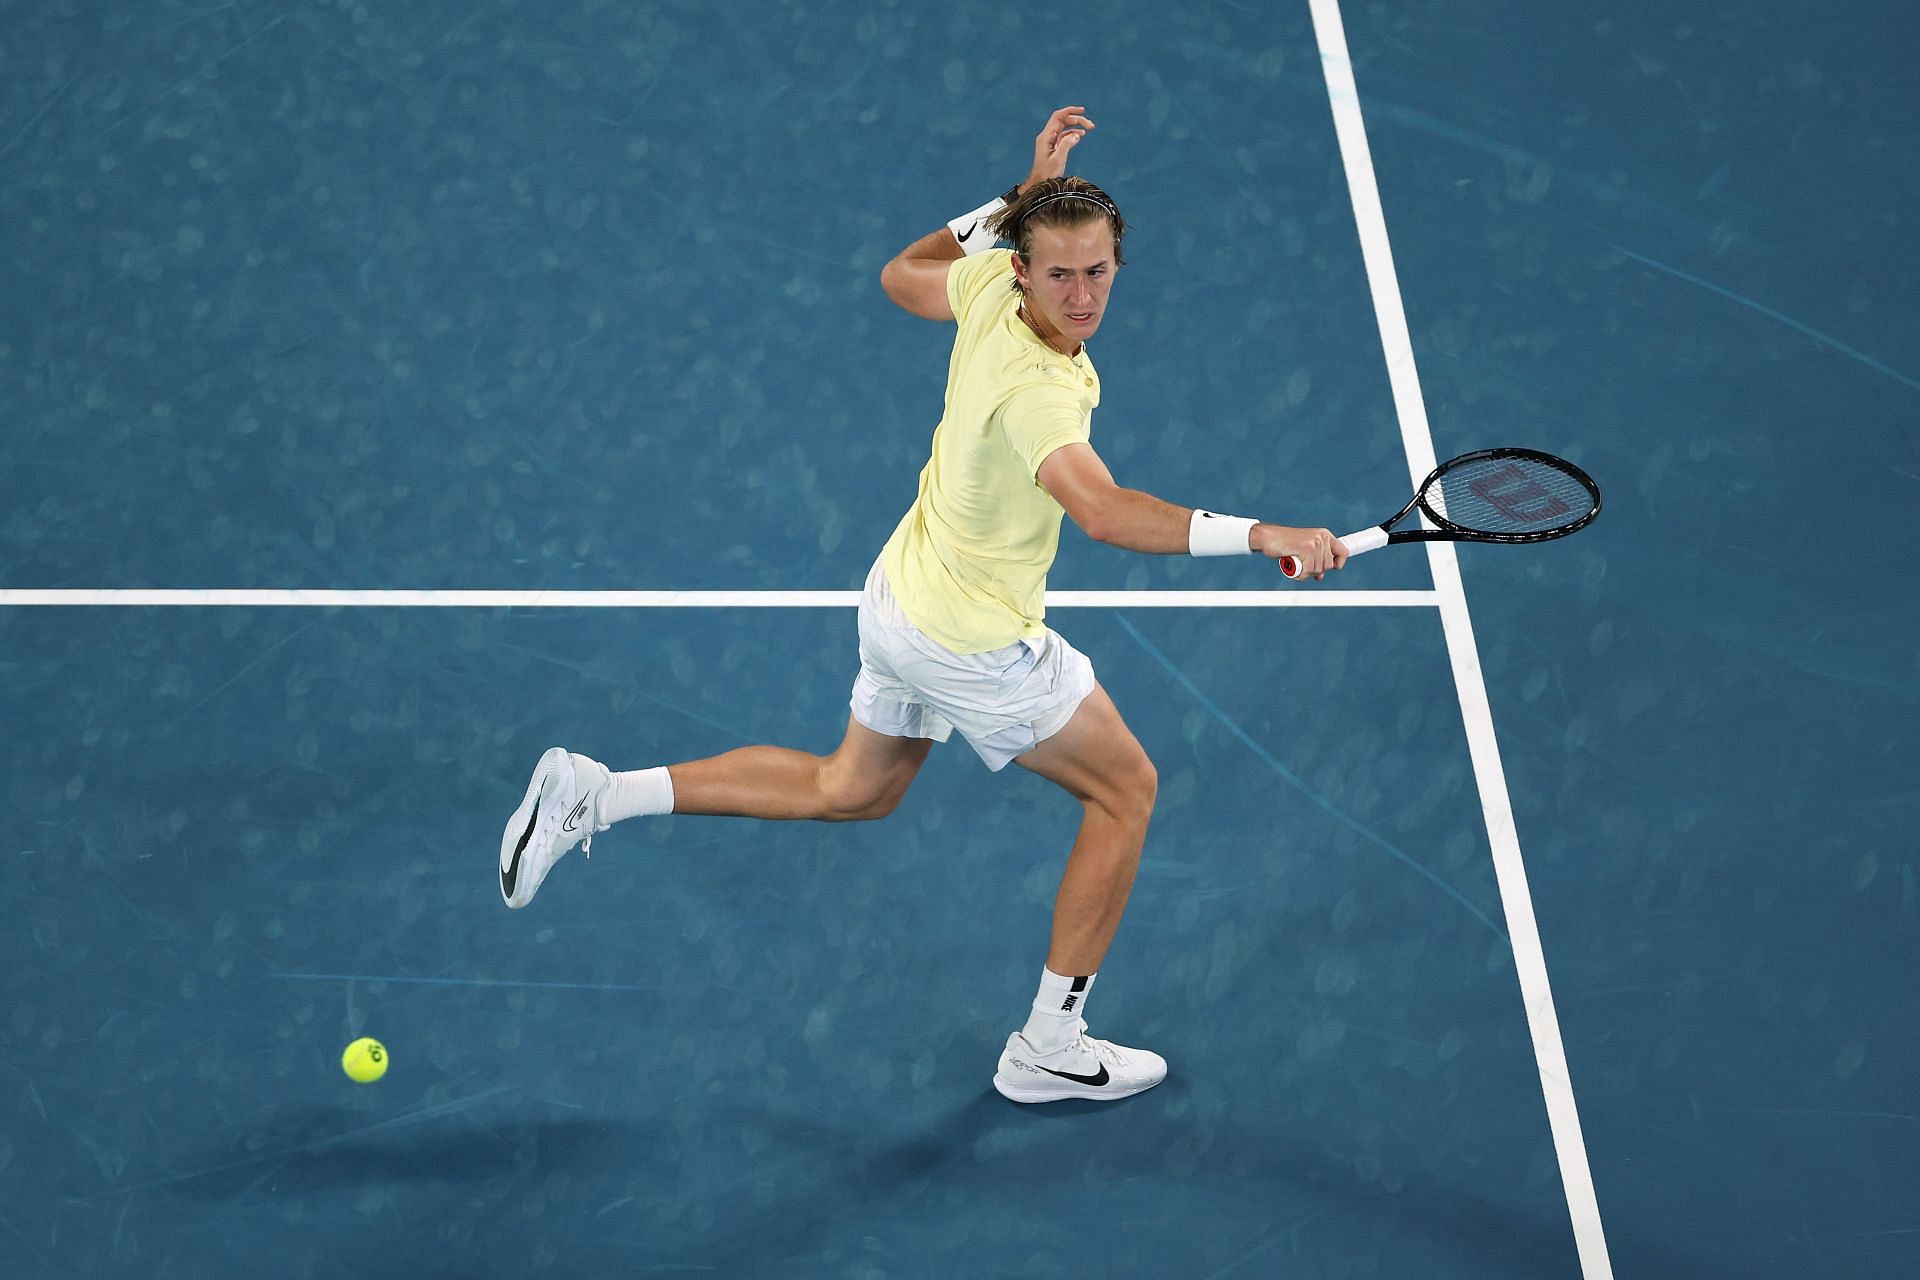 Sebastian Korda in action at the Australian Open